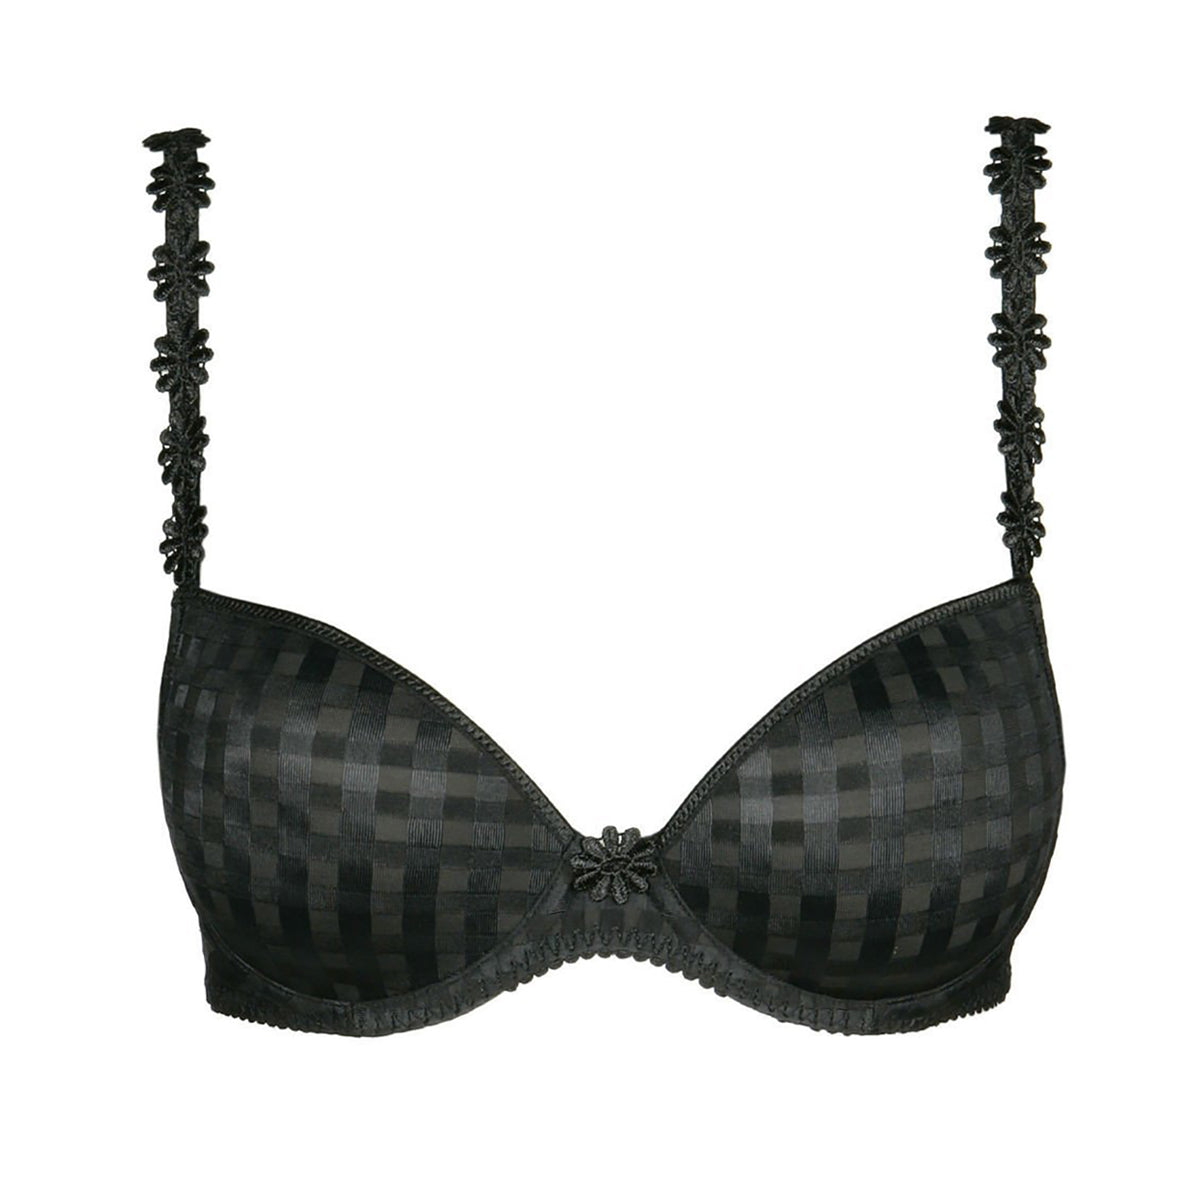 Marie Jo Avero 010-0418 Padded Bra in black mariejo lingerie toronto underwire bras linea intima